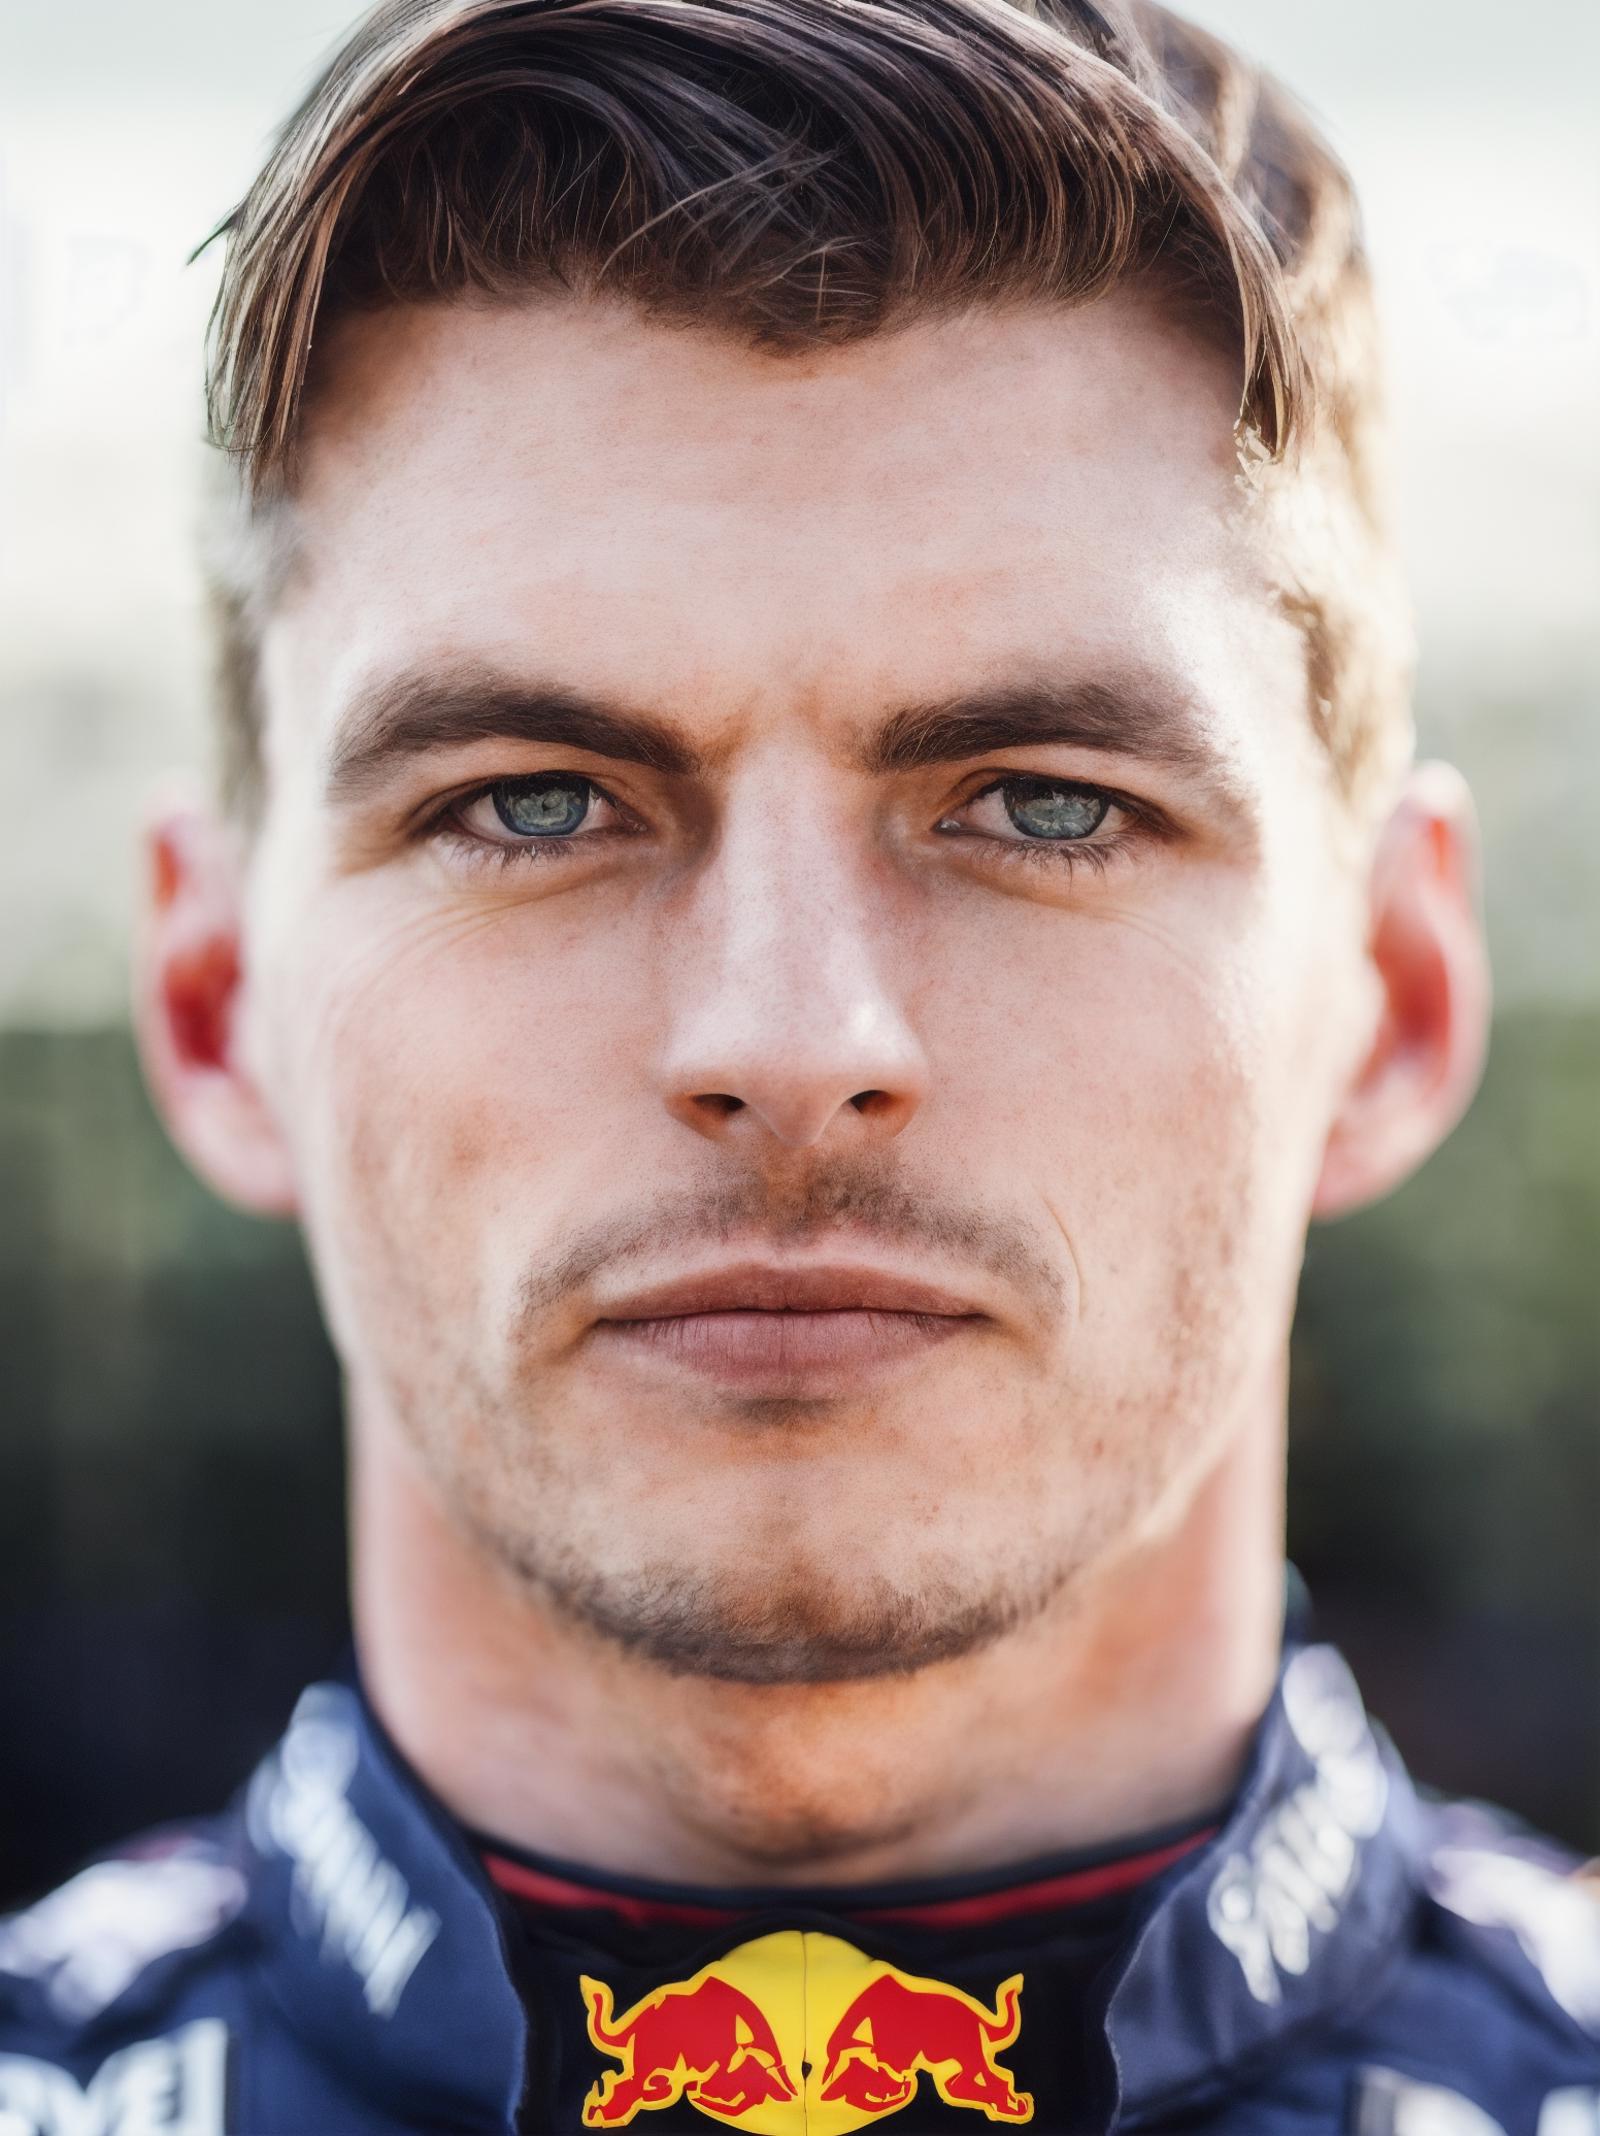 Max Verstappen - Formula 1 Racing driver image by MaiconAB